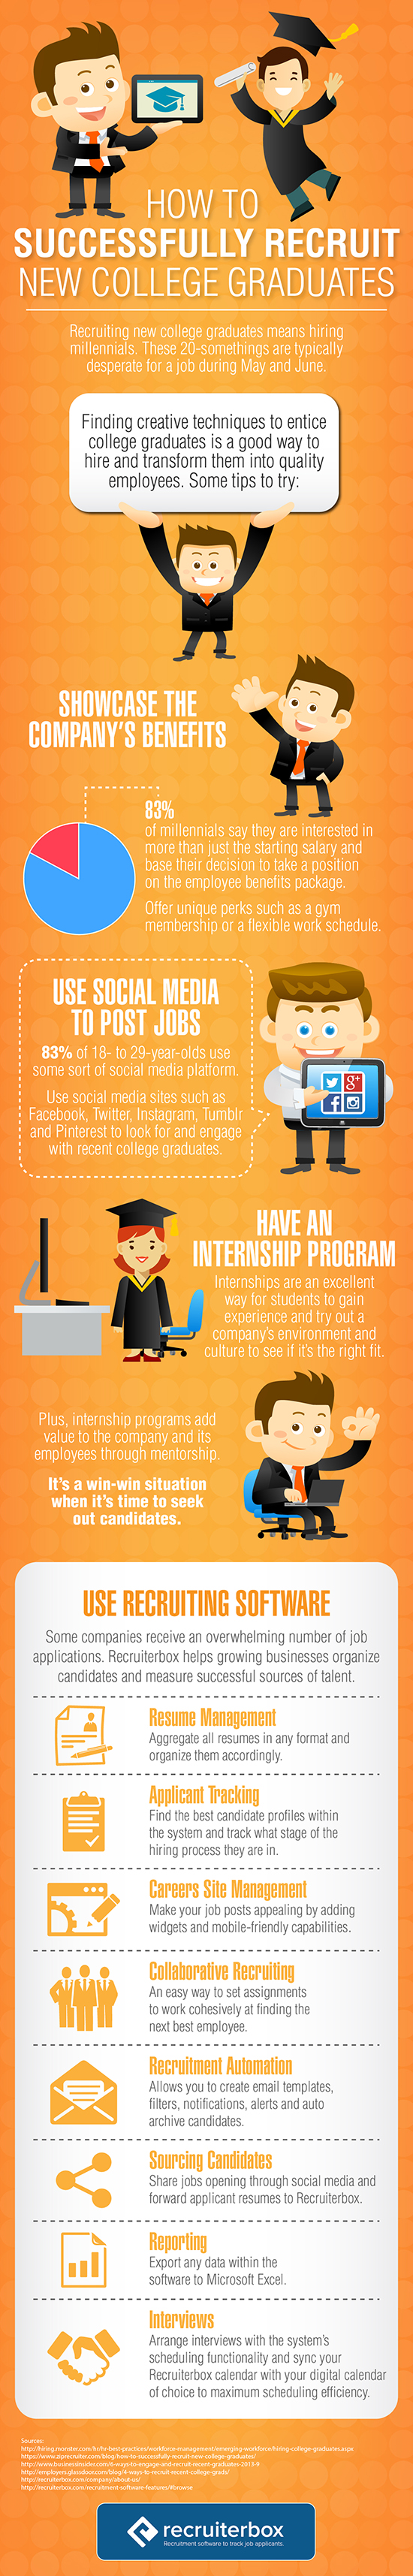 How to Recruit New College Graduates Infographic | Recruiterbox.com